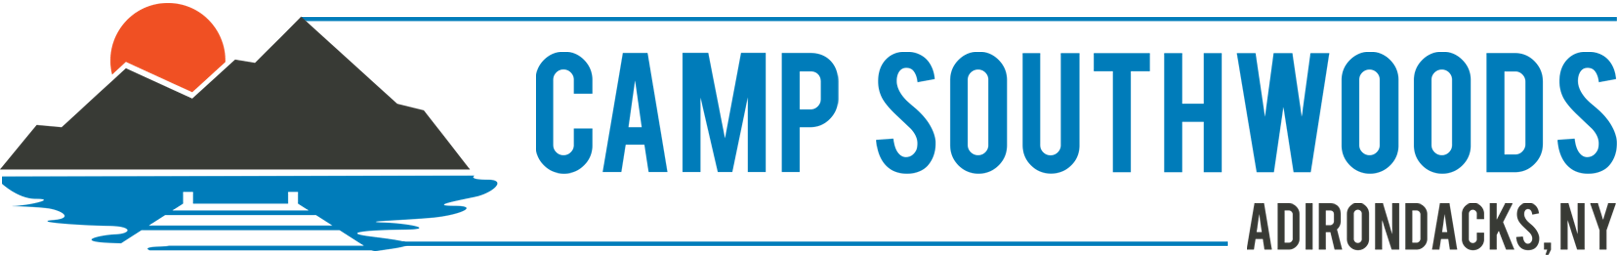 Camp Southwoods Logo